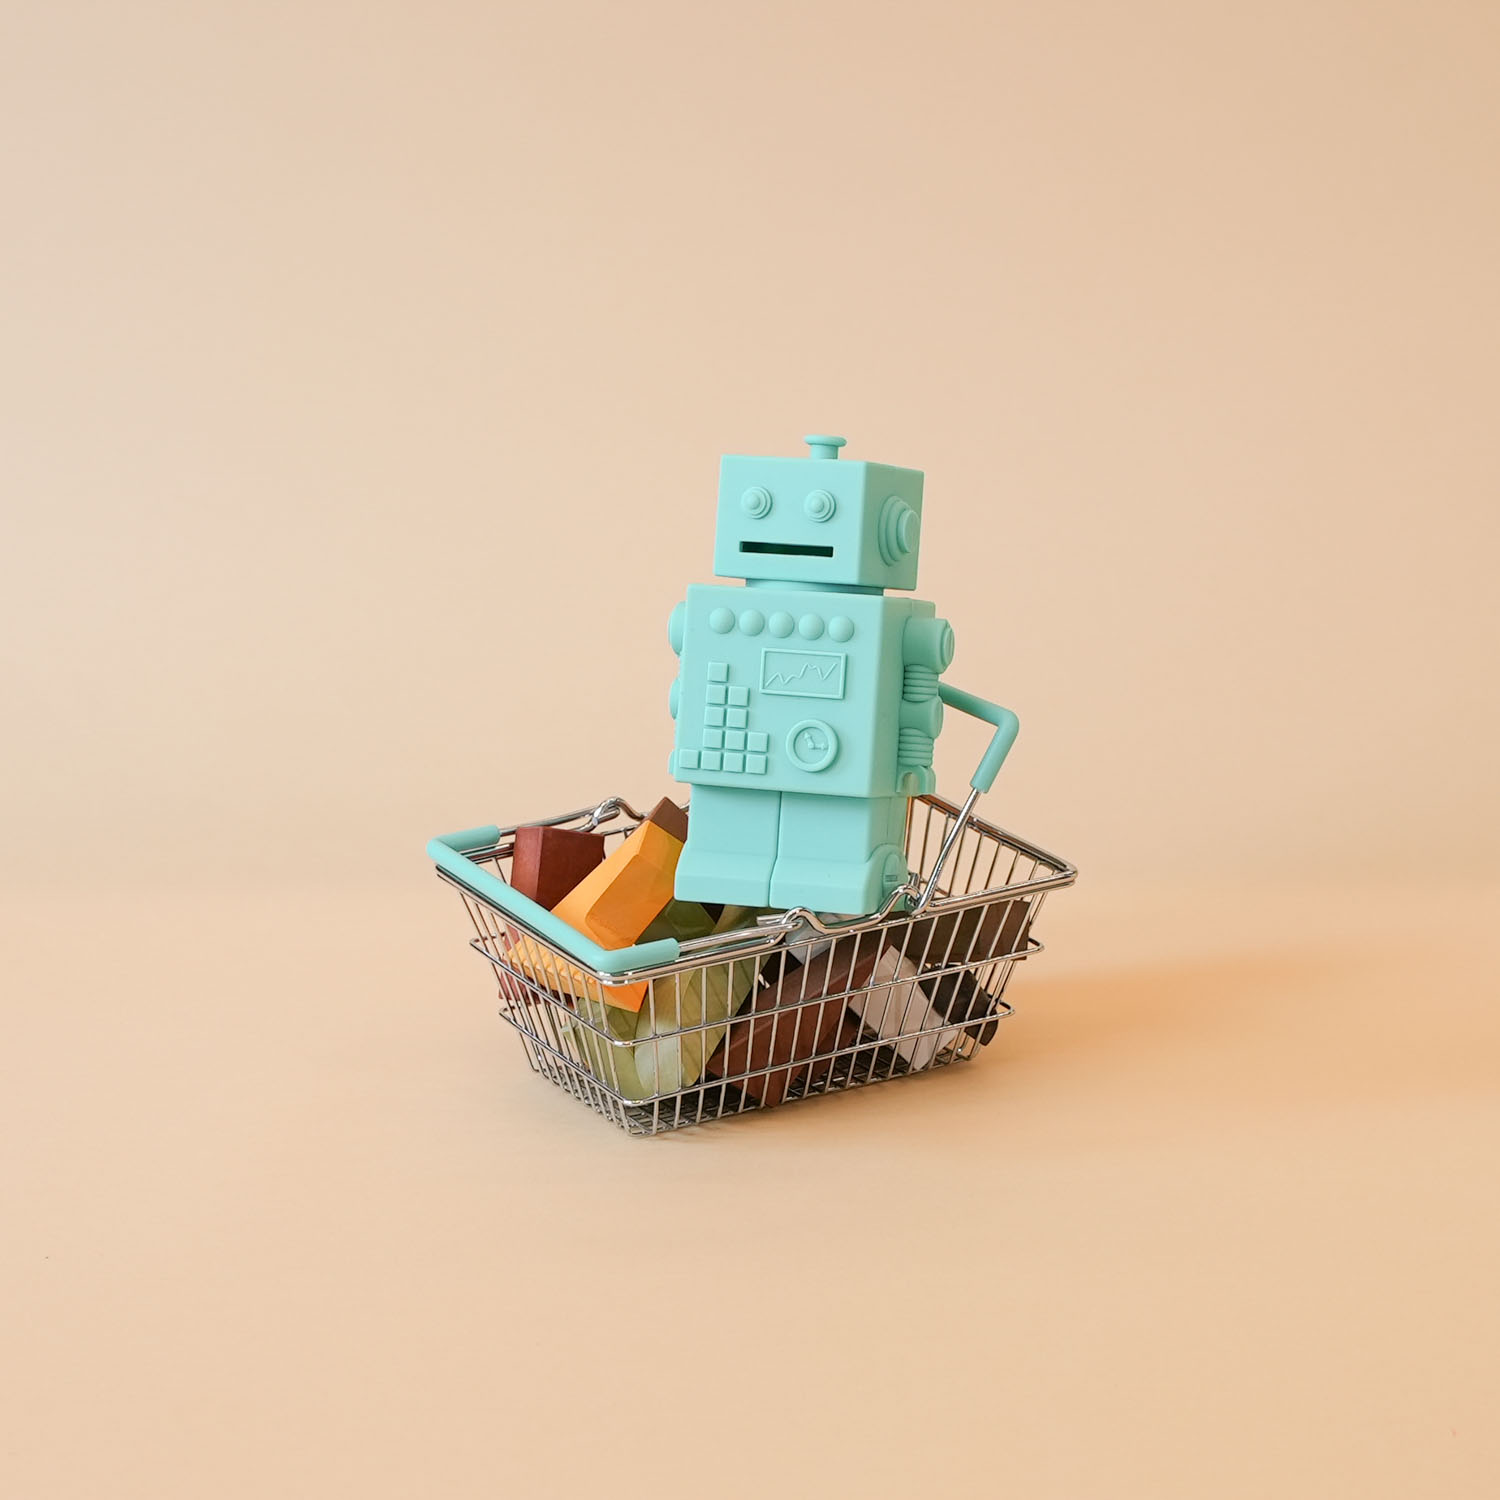 Bot in a shopping box